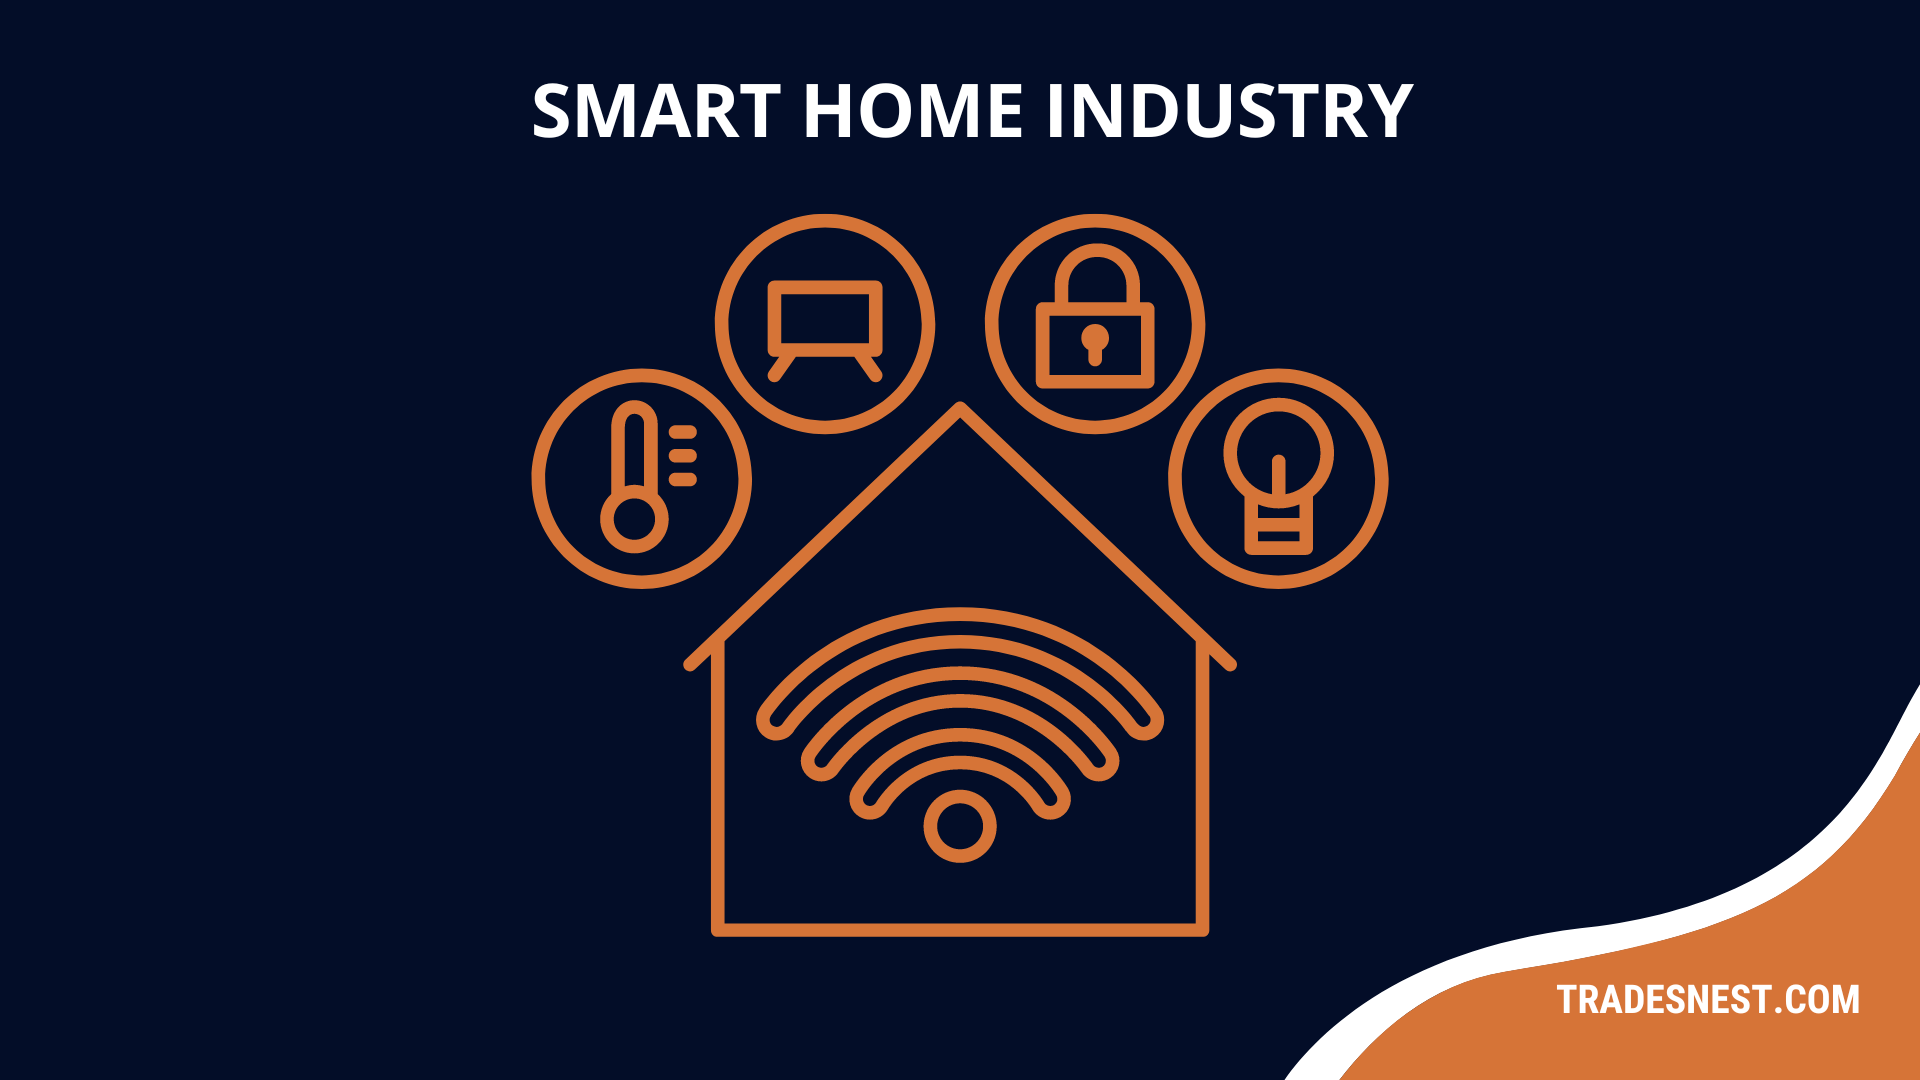 Smart home industry